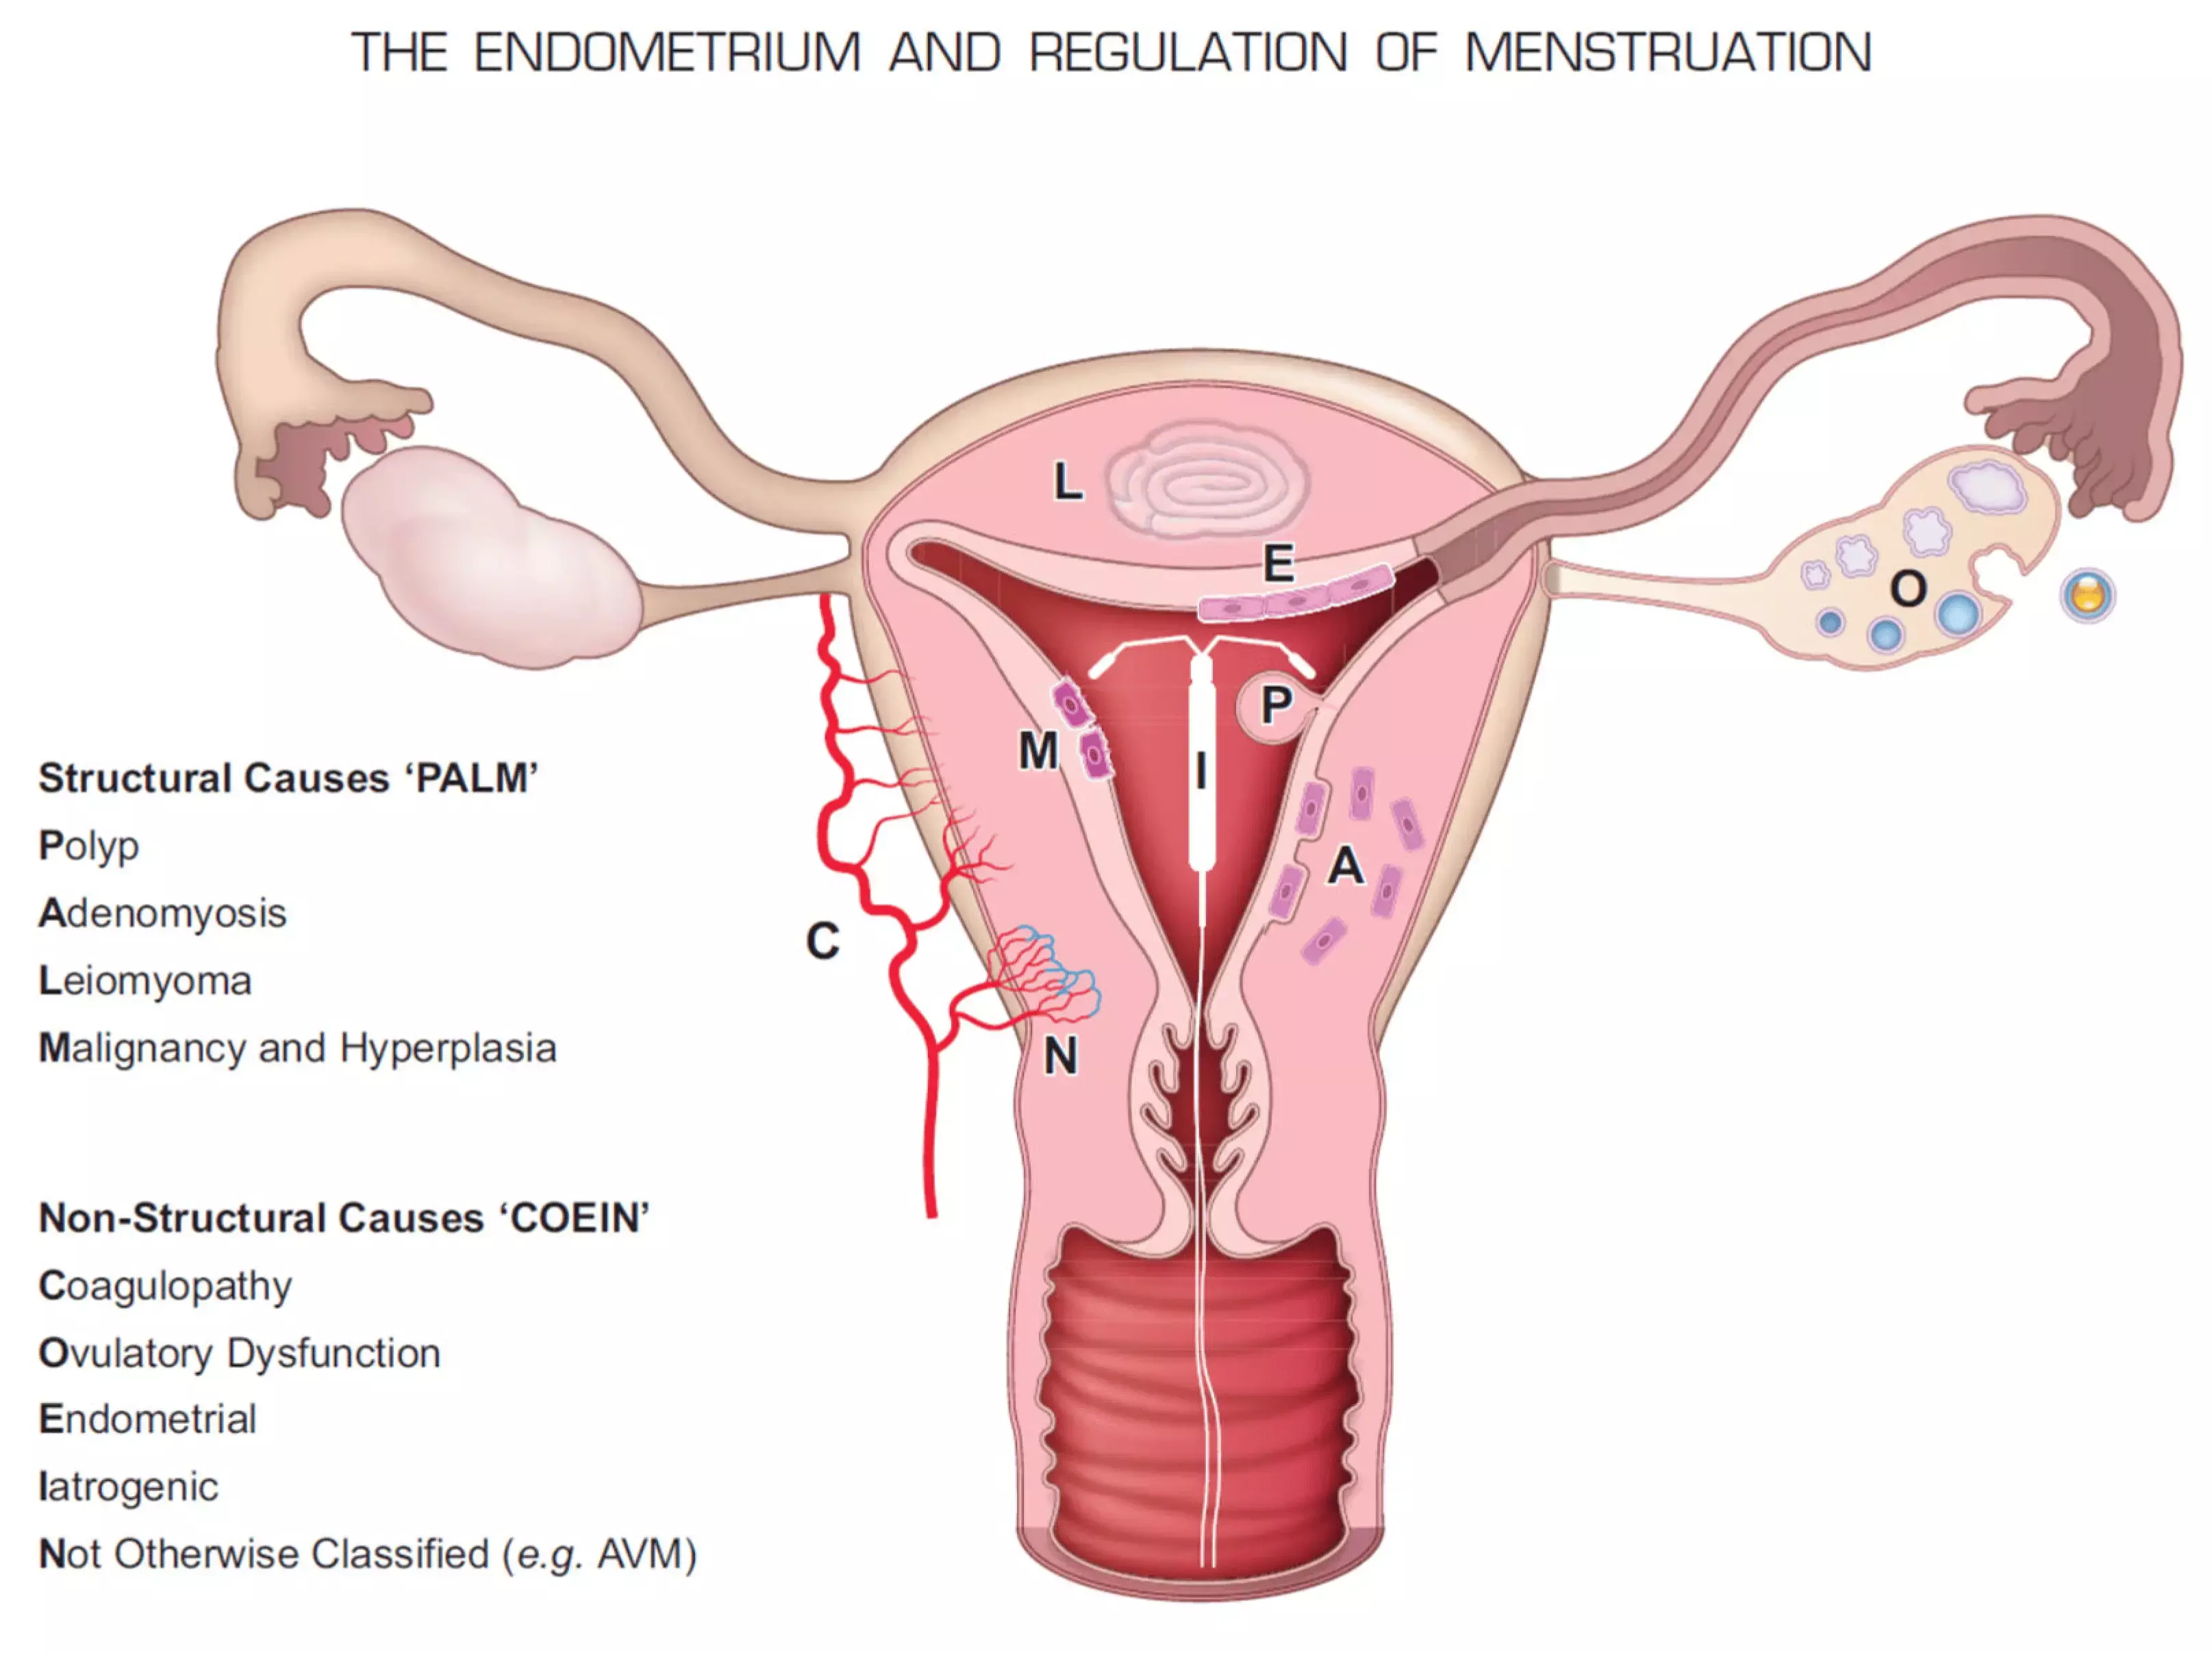 Use of levonorgestrel IUD significantly benefits women having heavy menstrual bleeding